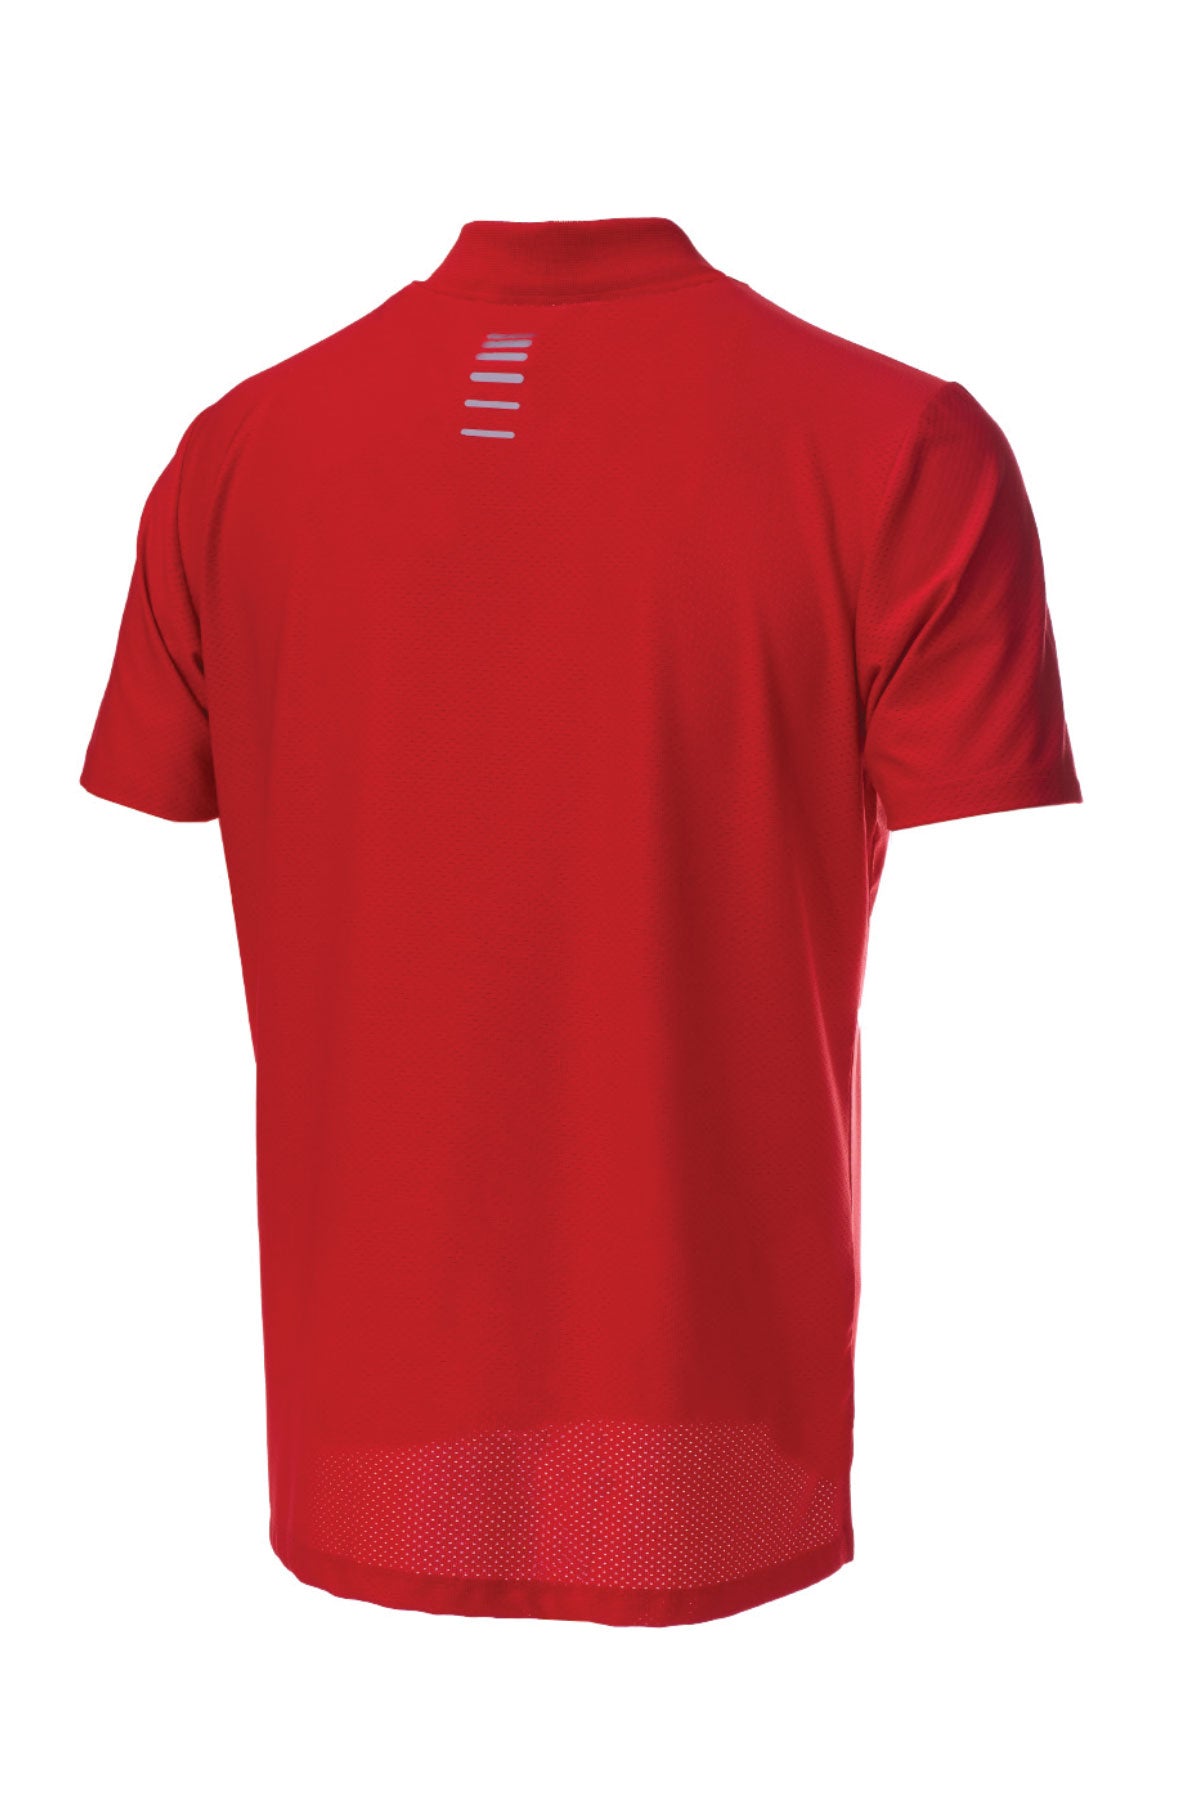 League Short Sleeve Polo Neck Shirt - Red - Stafu Pro Series